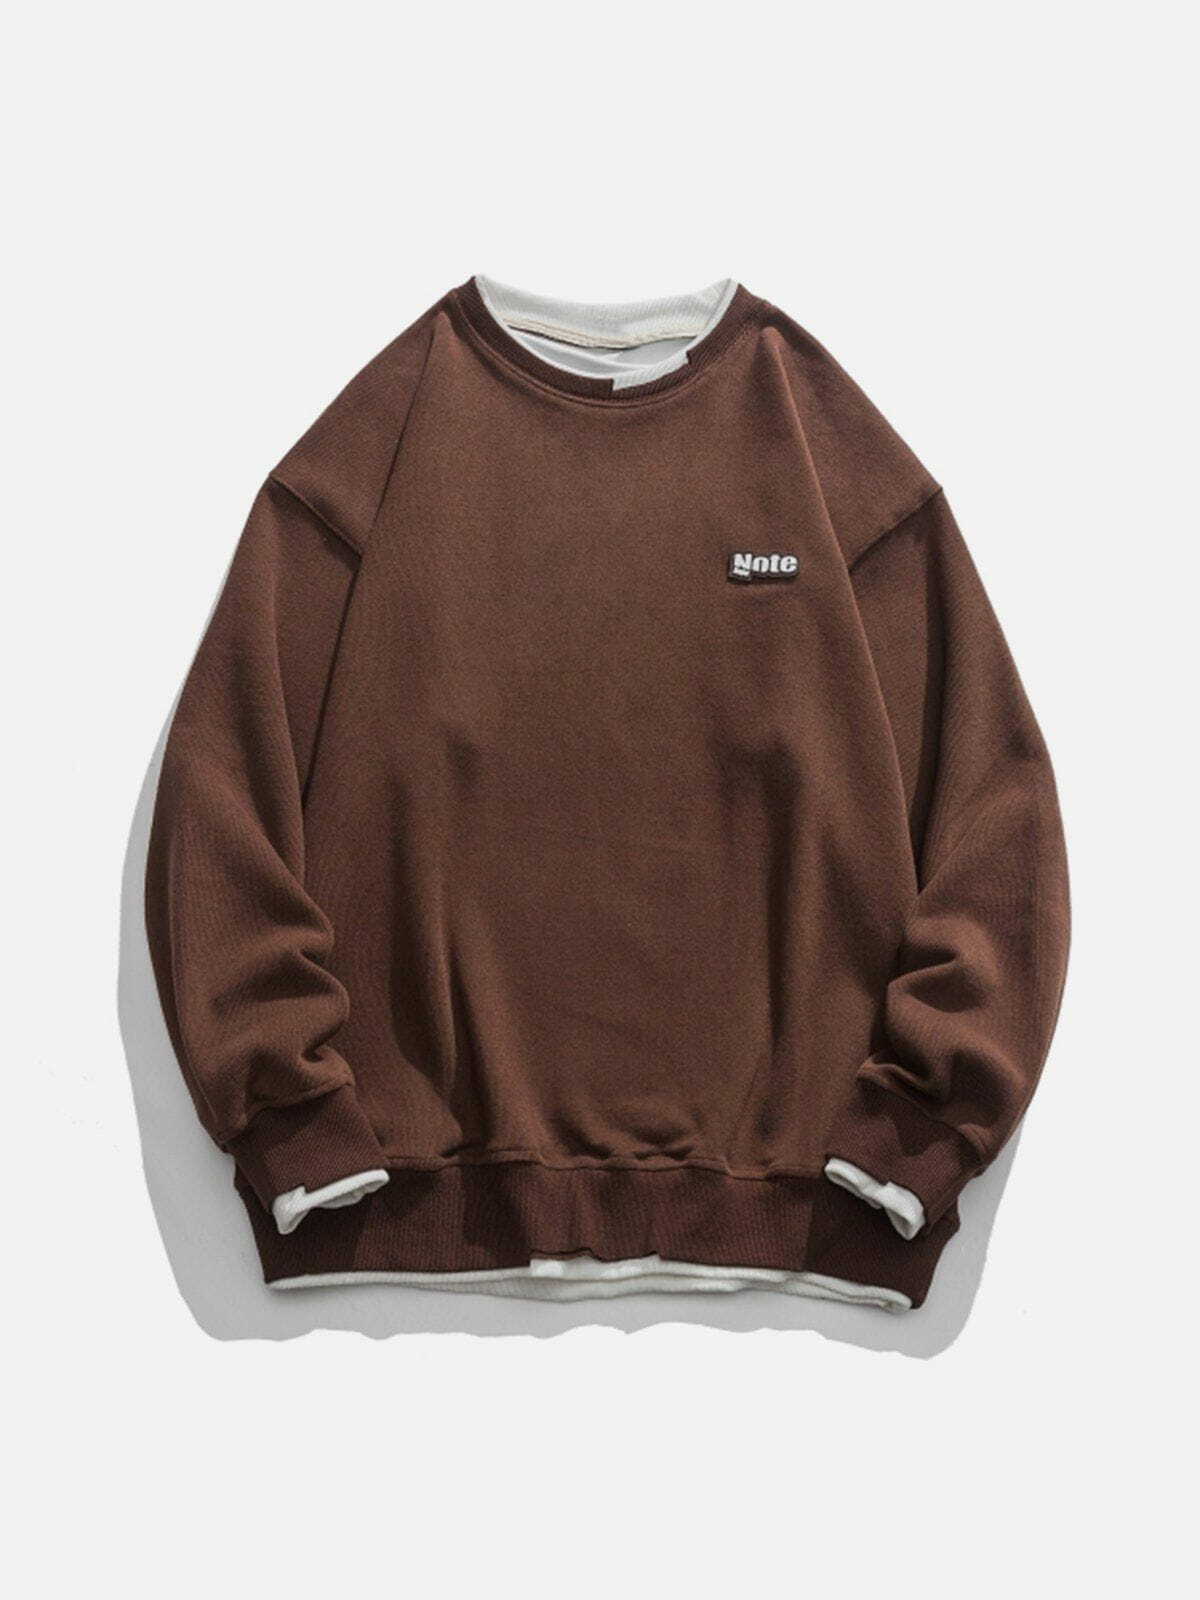 youthful fake two sweatshirt edgy  retro streetwear top 6525